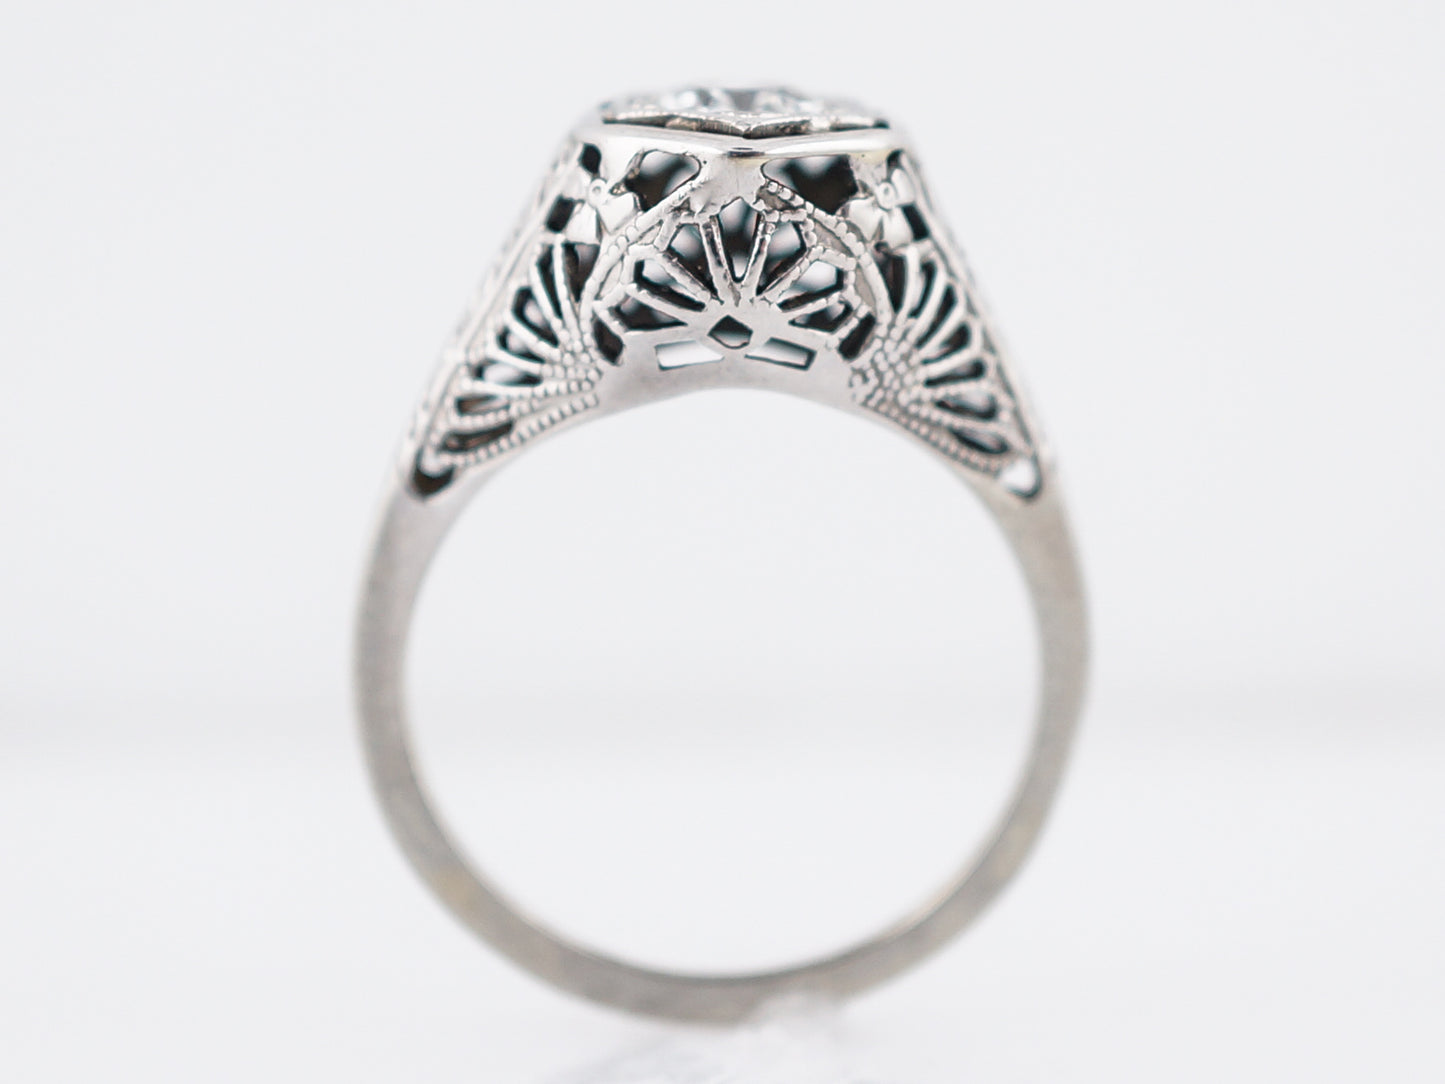 Antique Engagement Ring Art Deco .49 Old European Cut Diamond in 18k White Gold